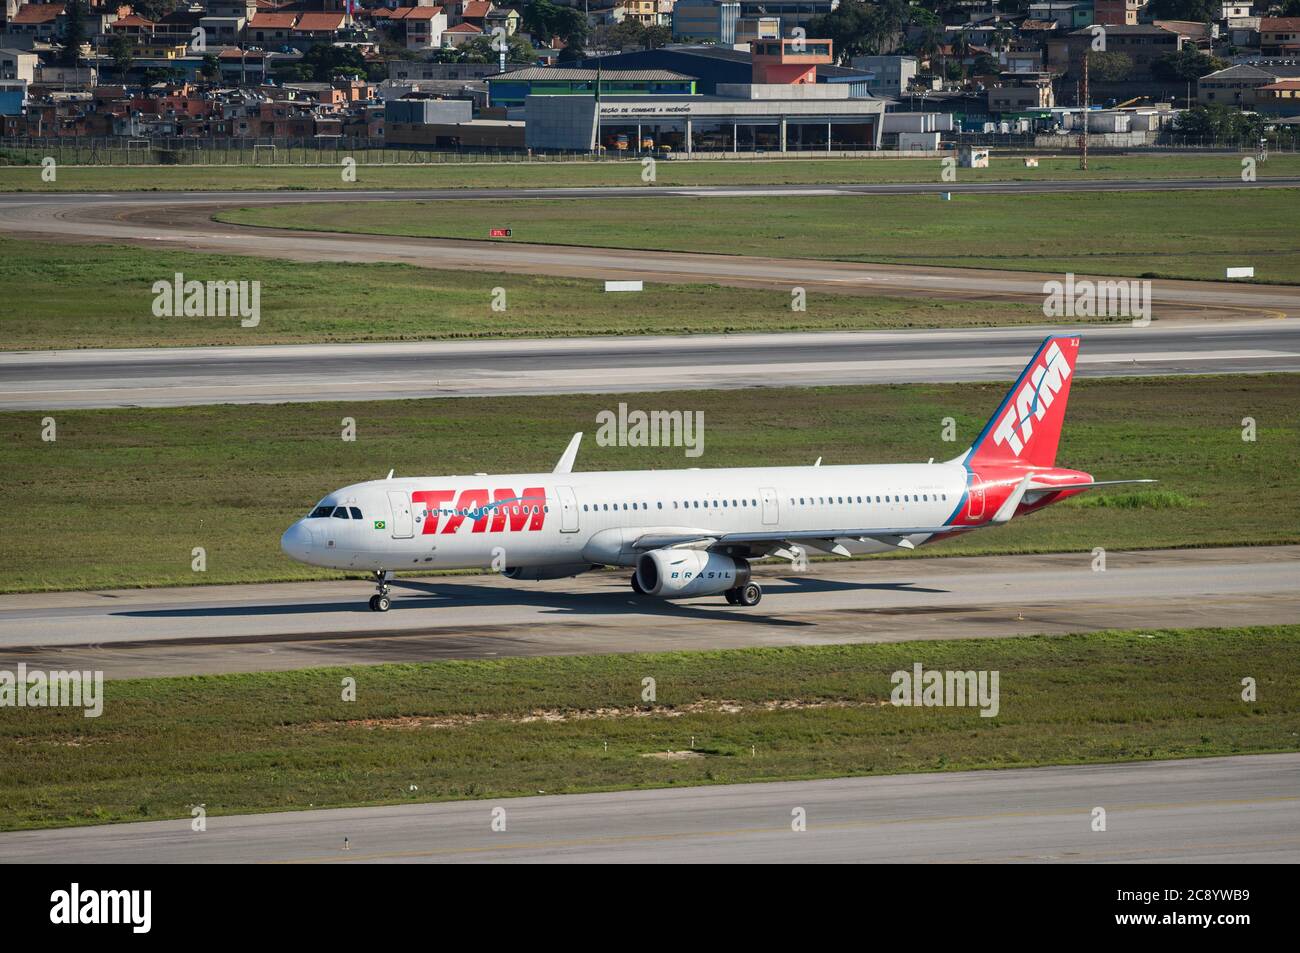 TAM Airlines Airbus A321-231(Narrow-body jetliner - Reg. PT-MXJ) taxing heading runway 27R of Sao Paulo/Guarulhos International Airport. Stock Photo